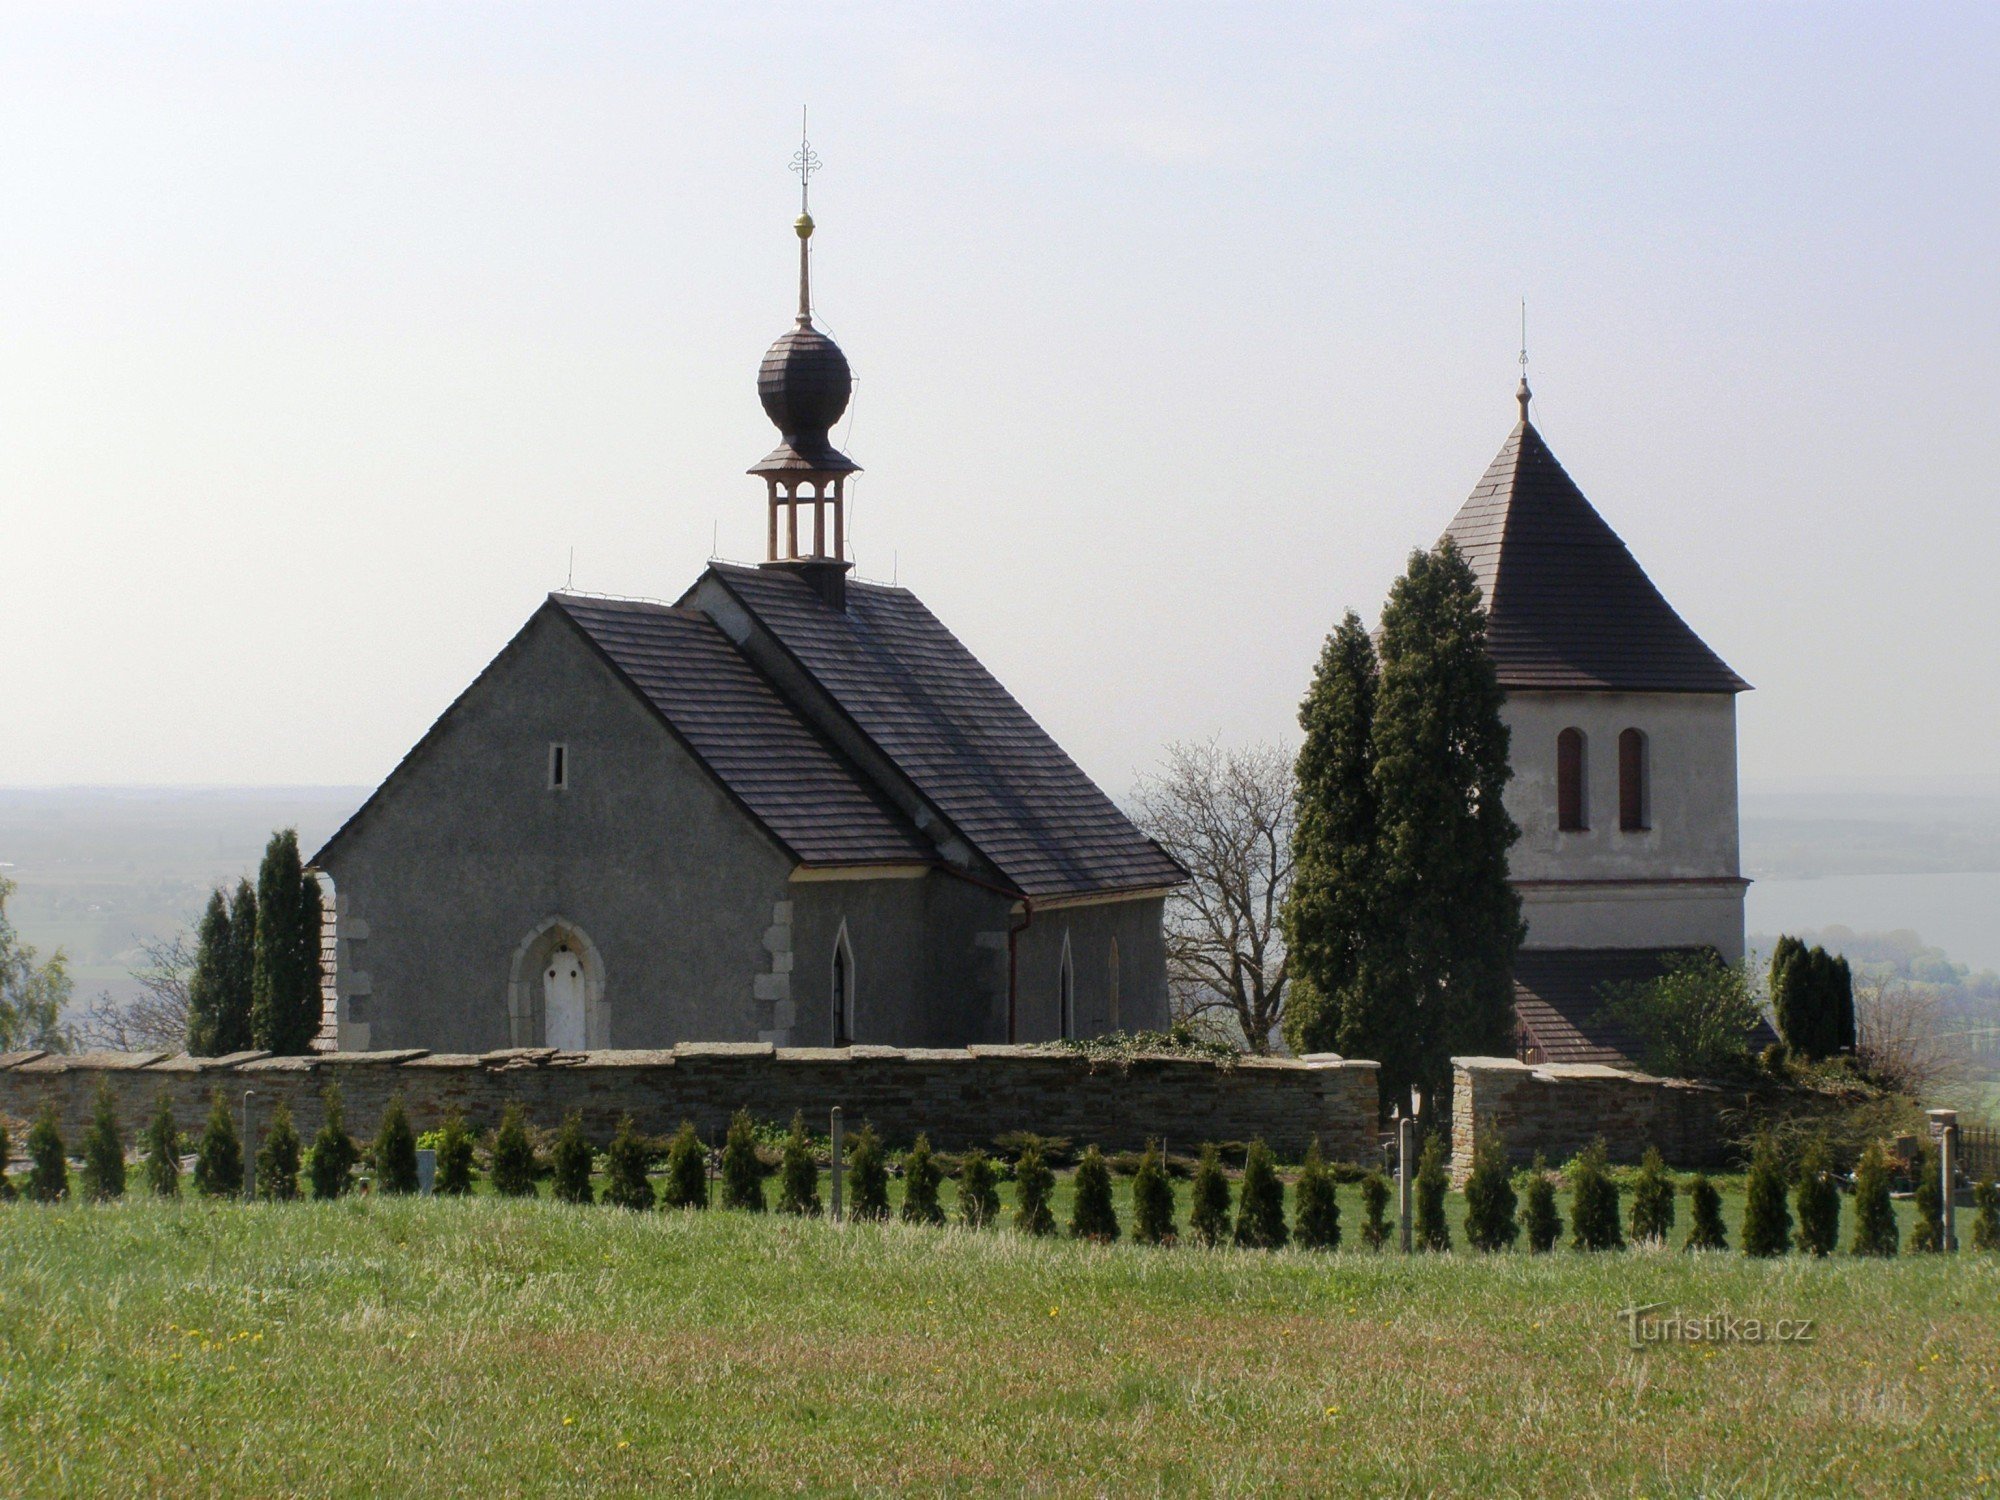 Václavice - εκκλησία του Αγ. Wenceslas με το καμπαναριό